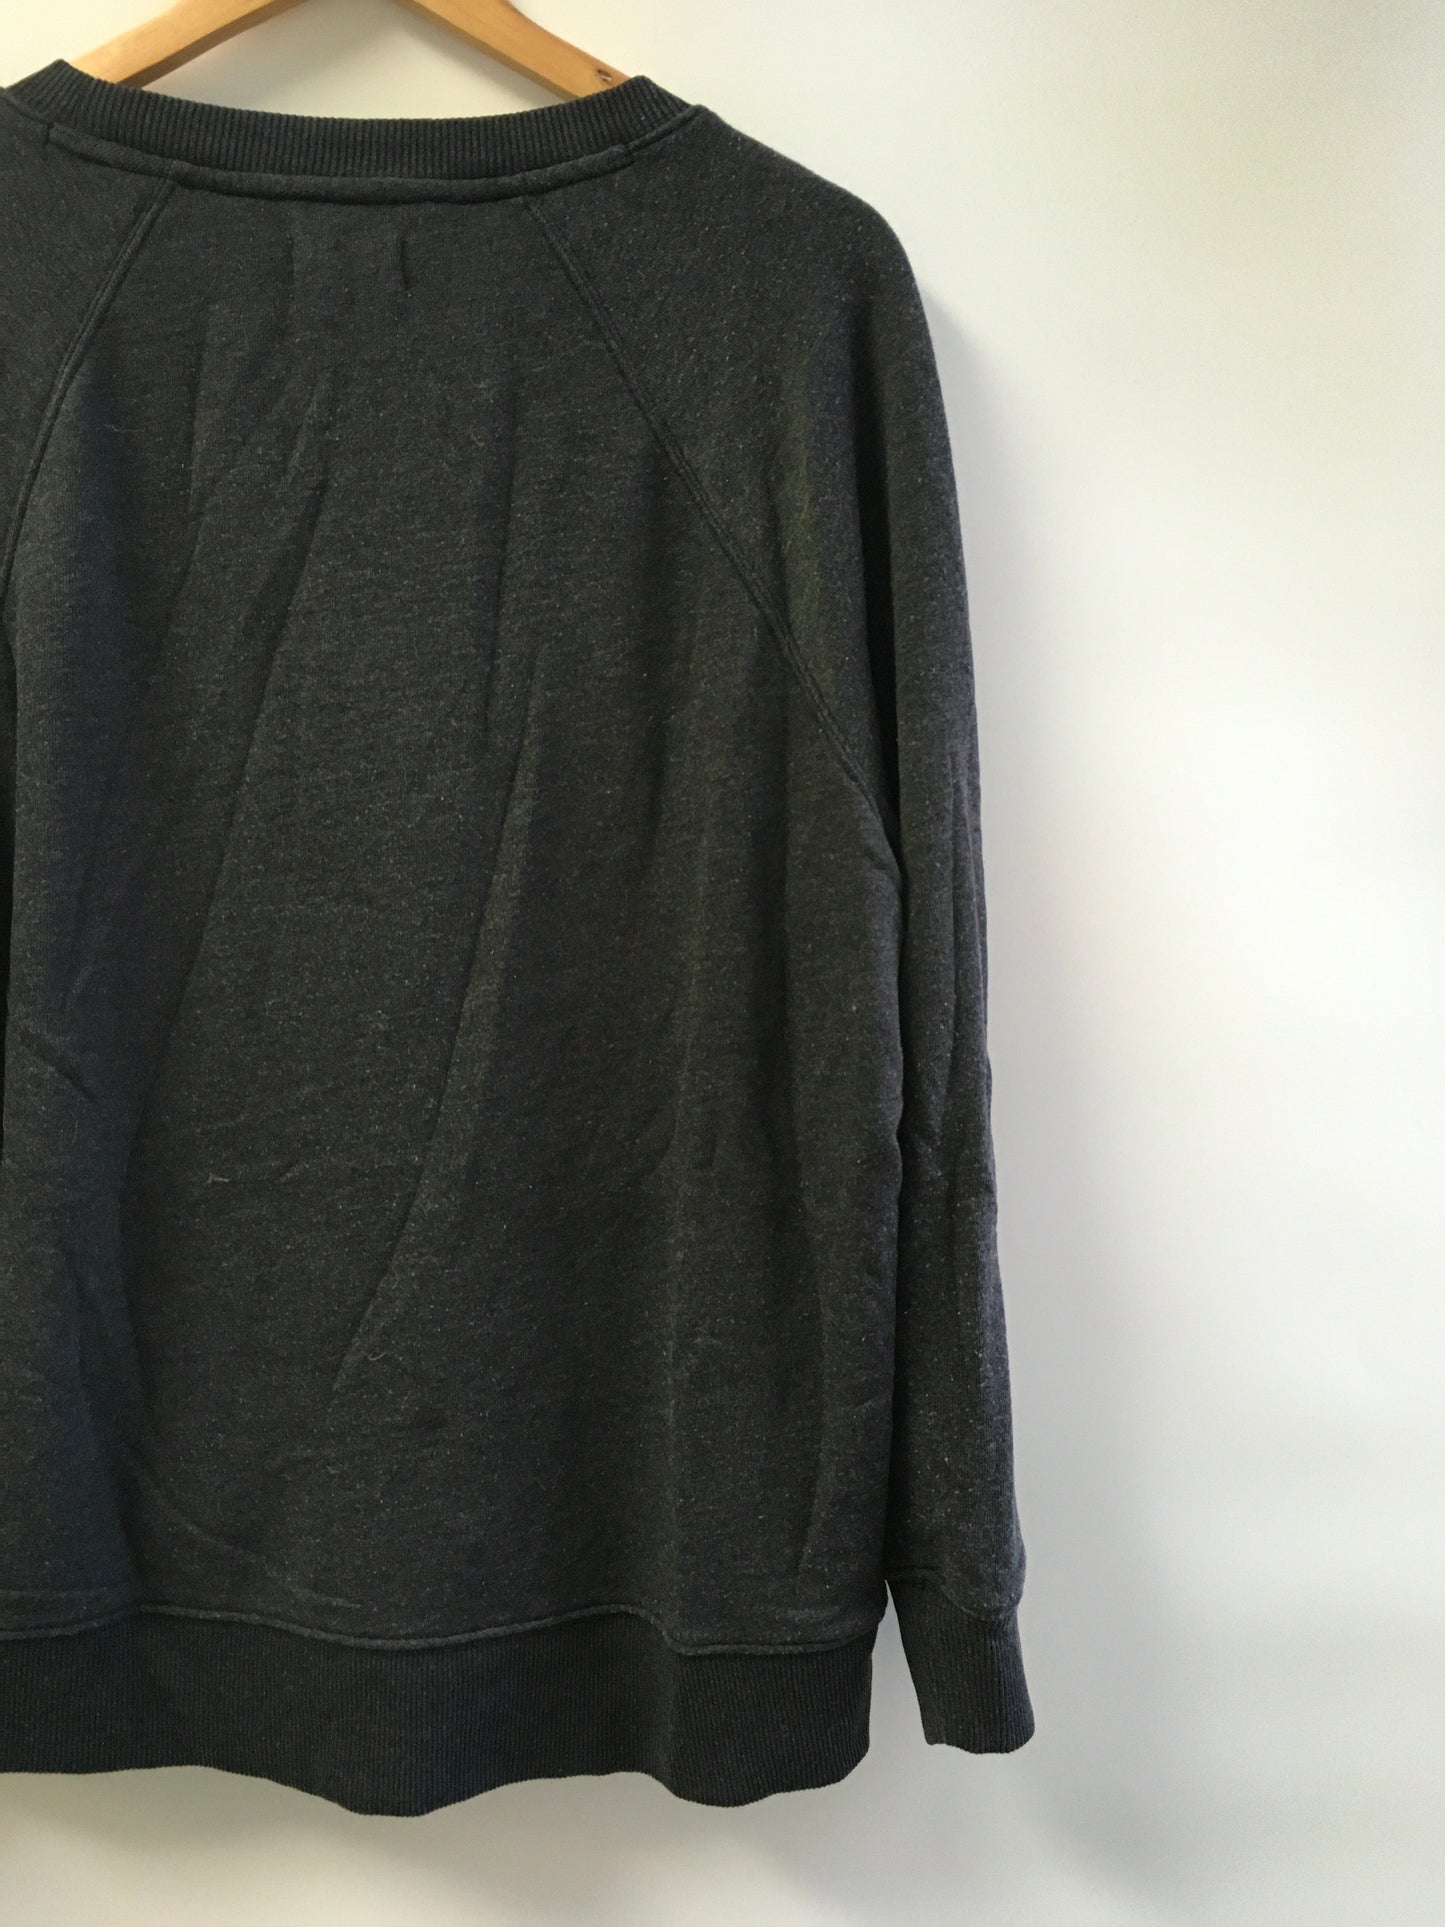 Sweatshirt Crewneck By Lou And Grey  Size: S